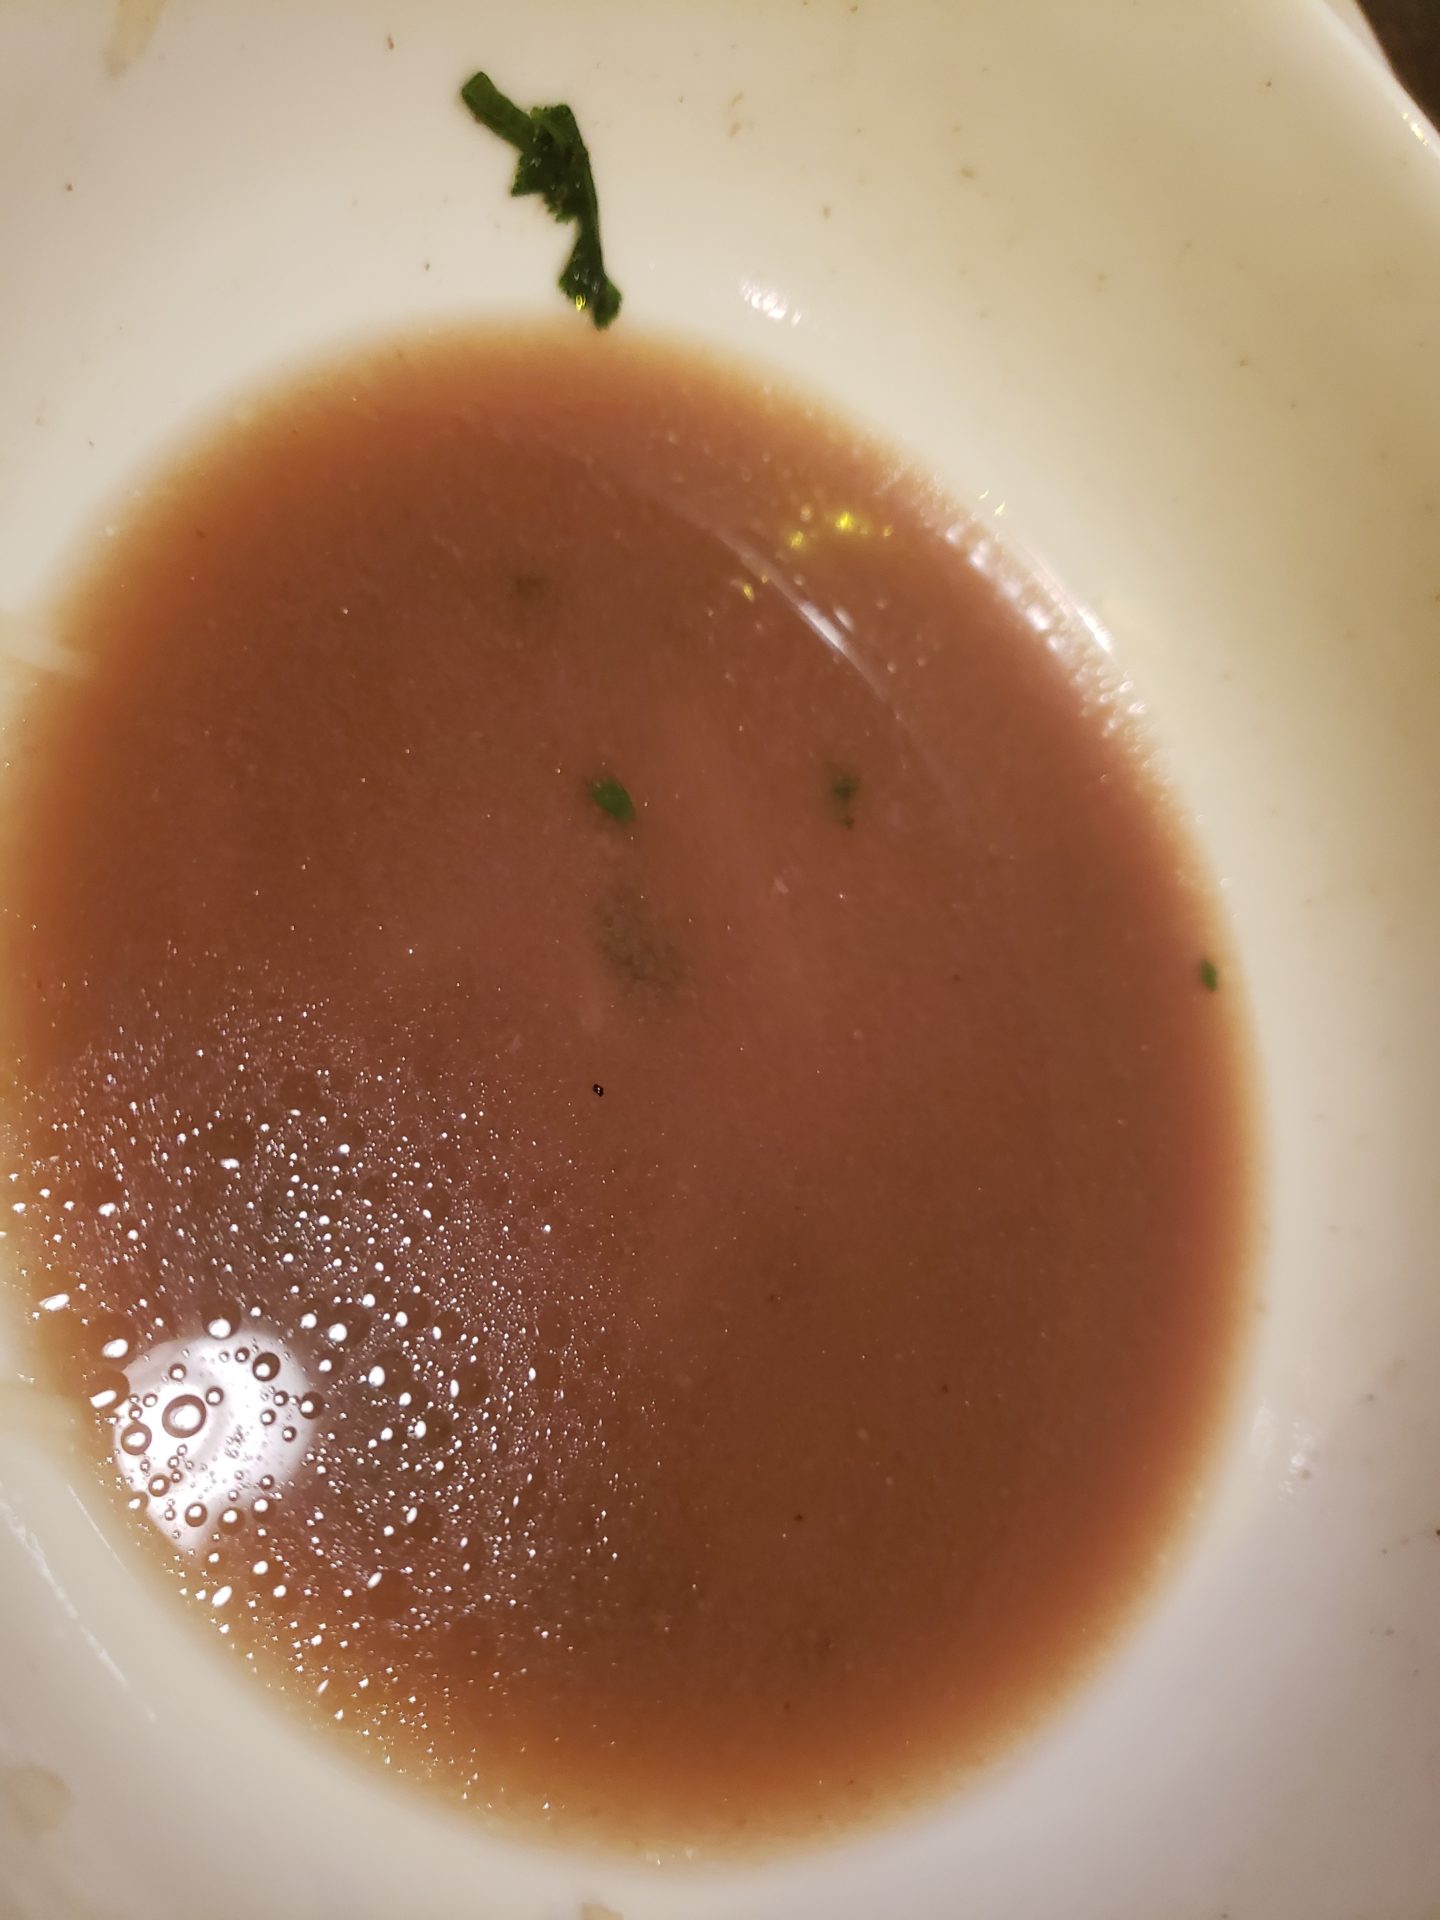 a bowl of brown liquid